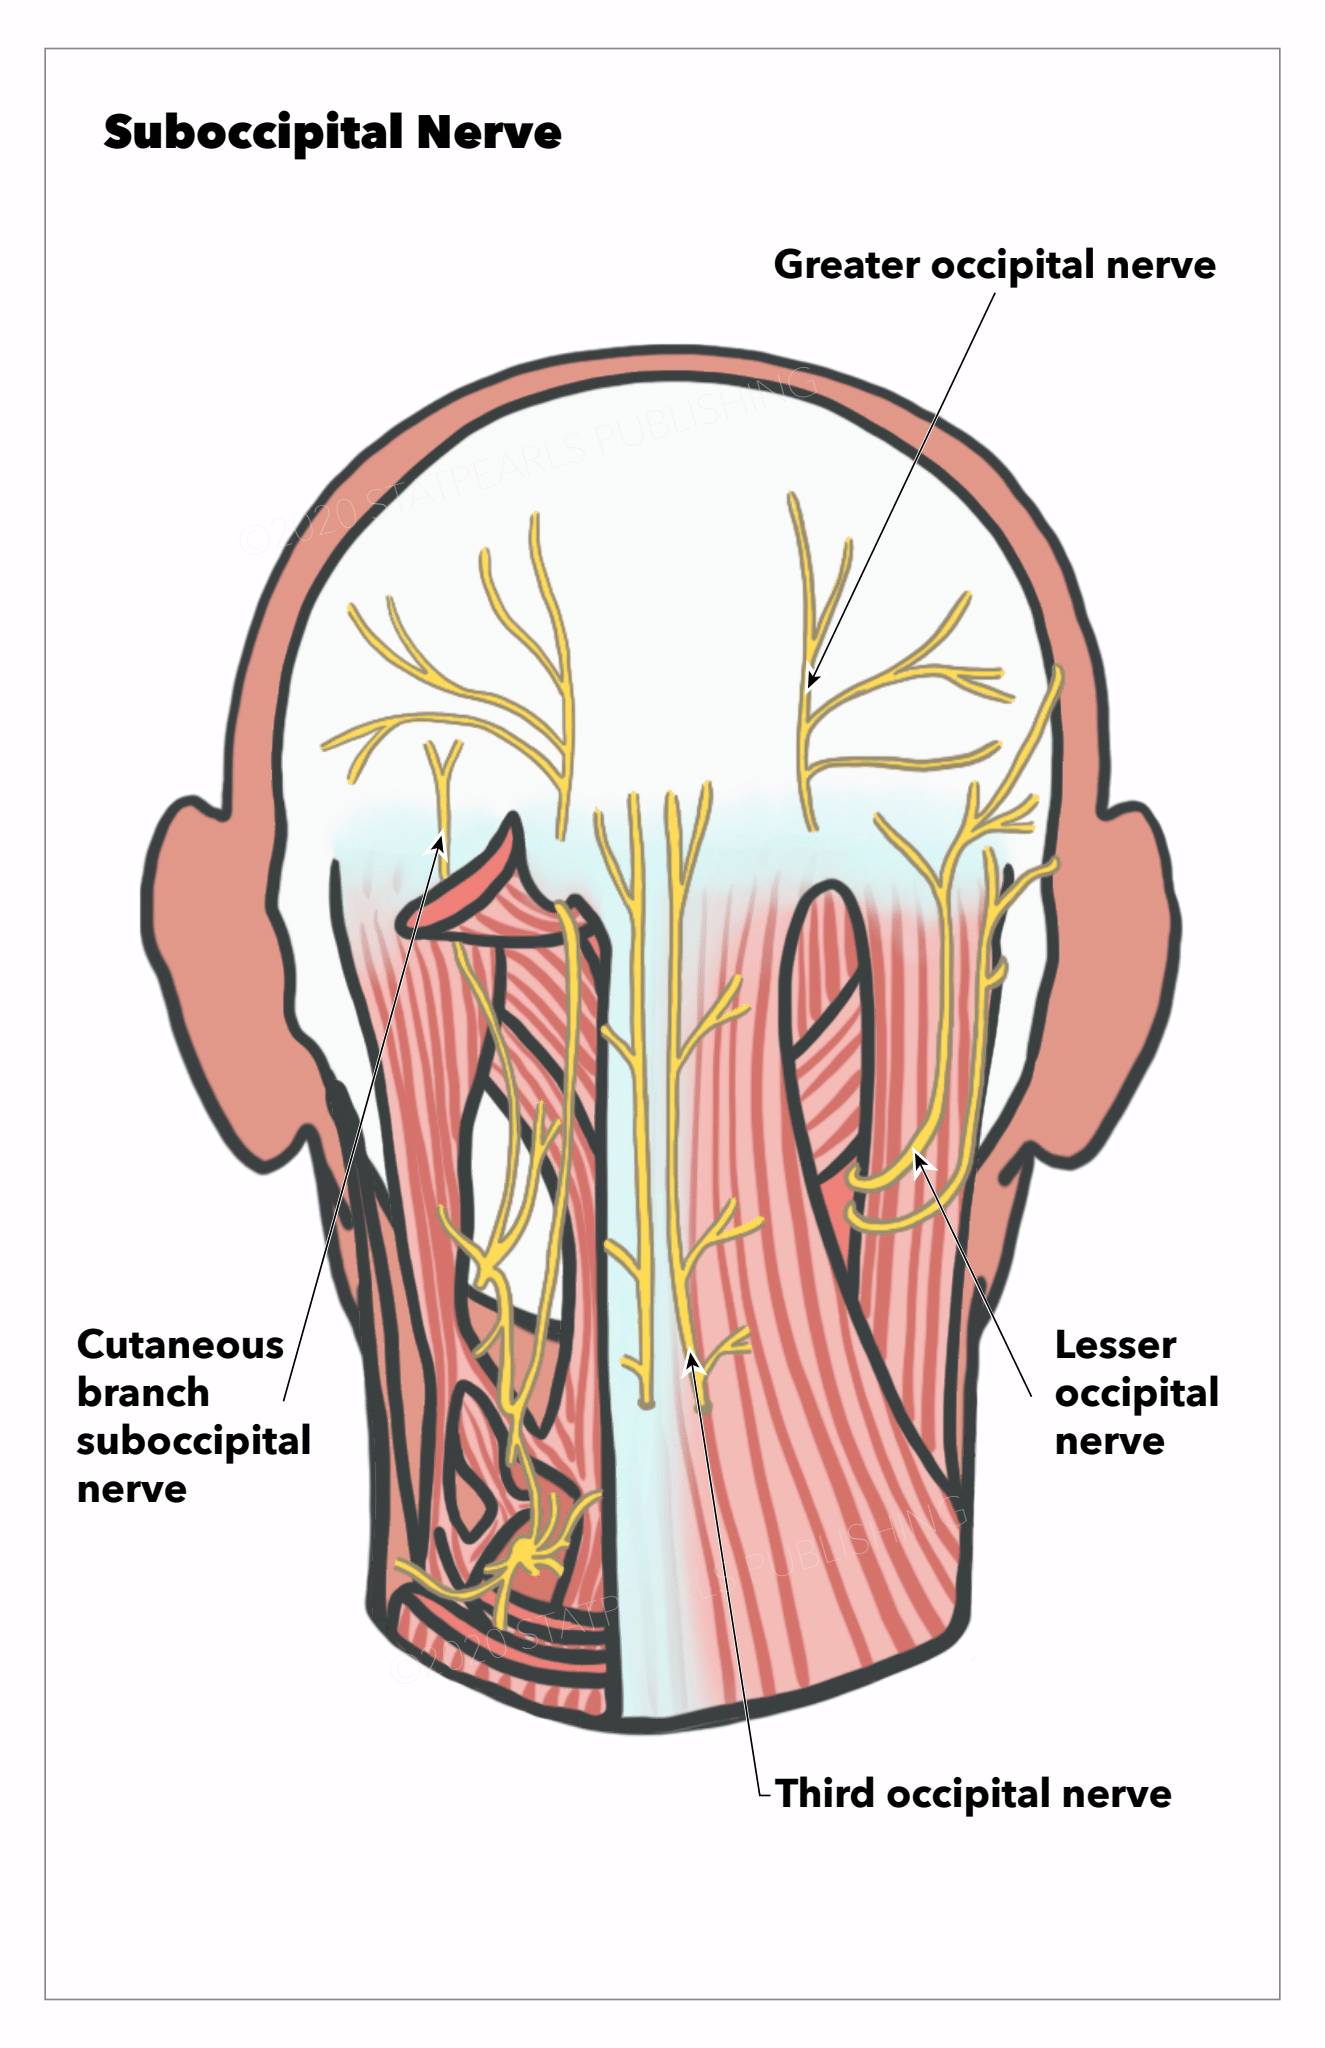 Suboccipital Nerve, Greater occipital nerve, Cutaneous branch suboccipital nerve, Lesser occipital nerve, Third occipital nerve